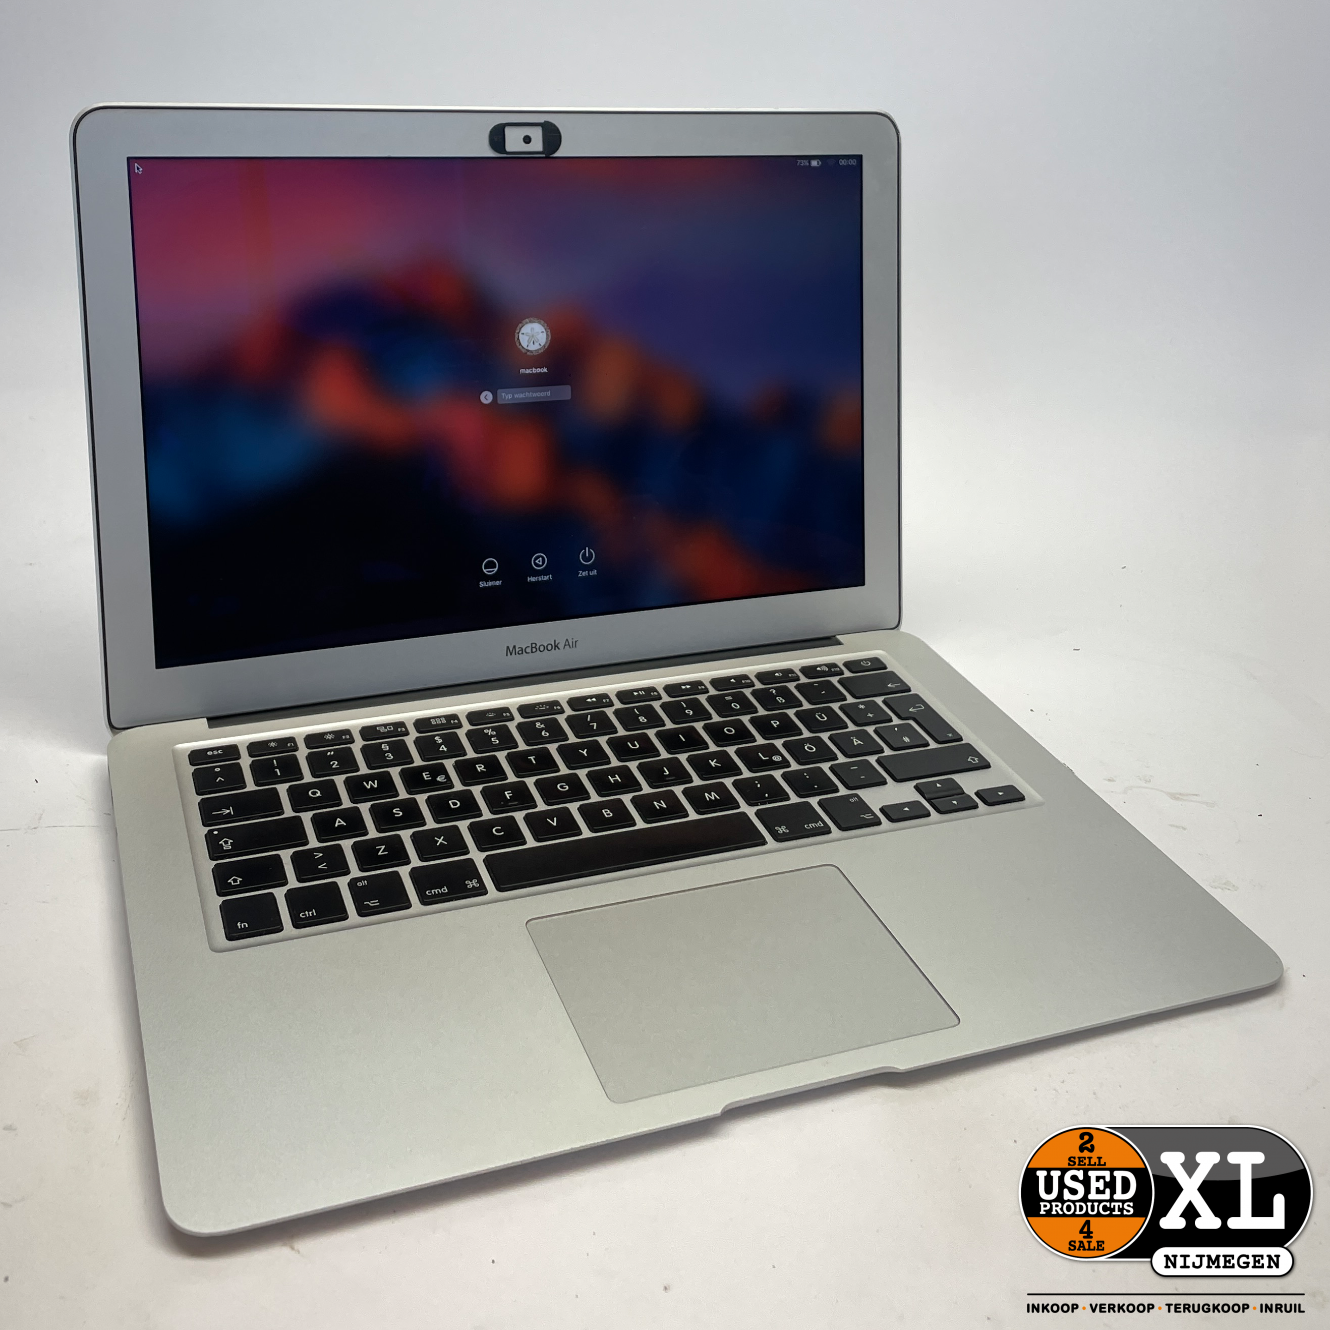 Apple MacBook Air 2011 Laptop Inch | i5 4GB 256GB met Garantie - Used Products Nijmegen XL